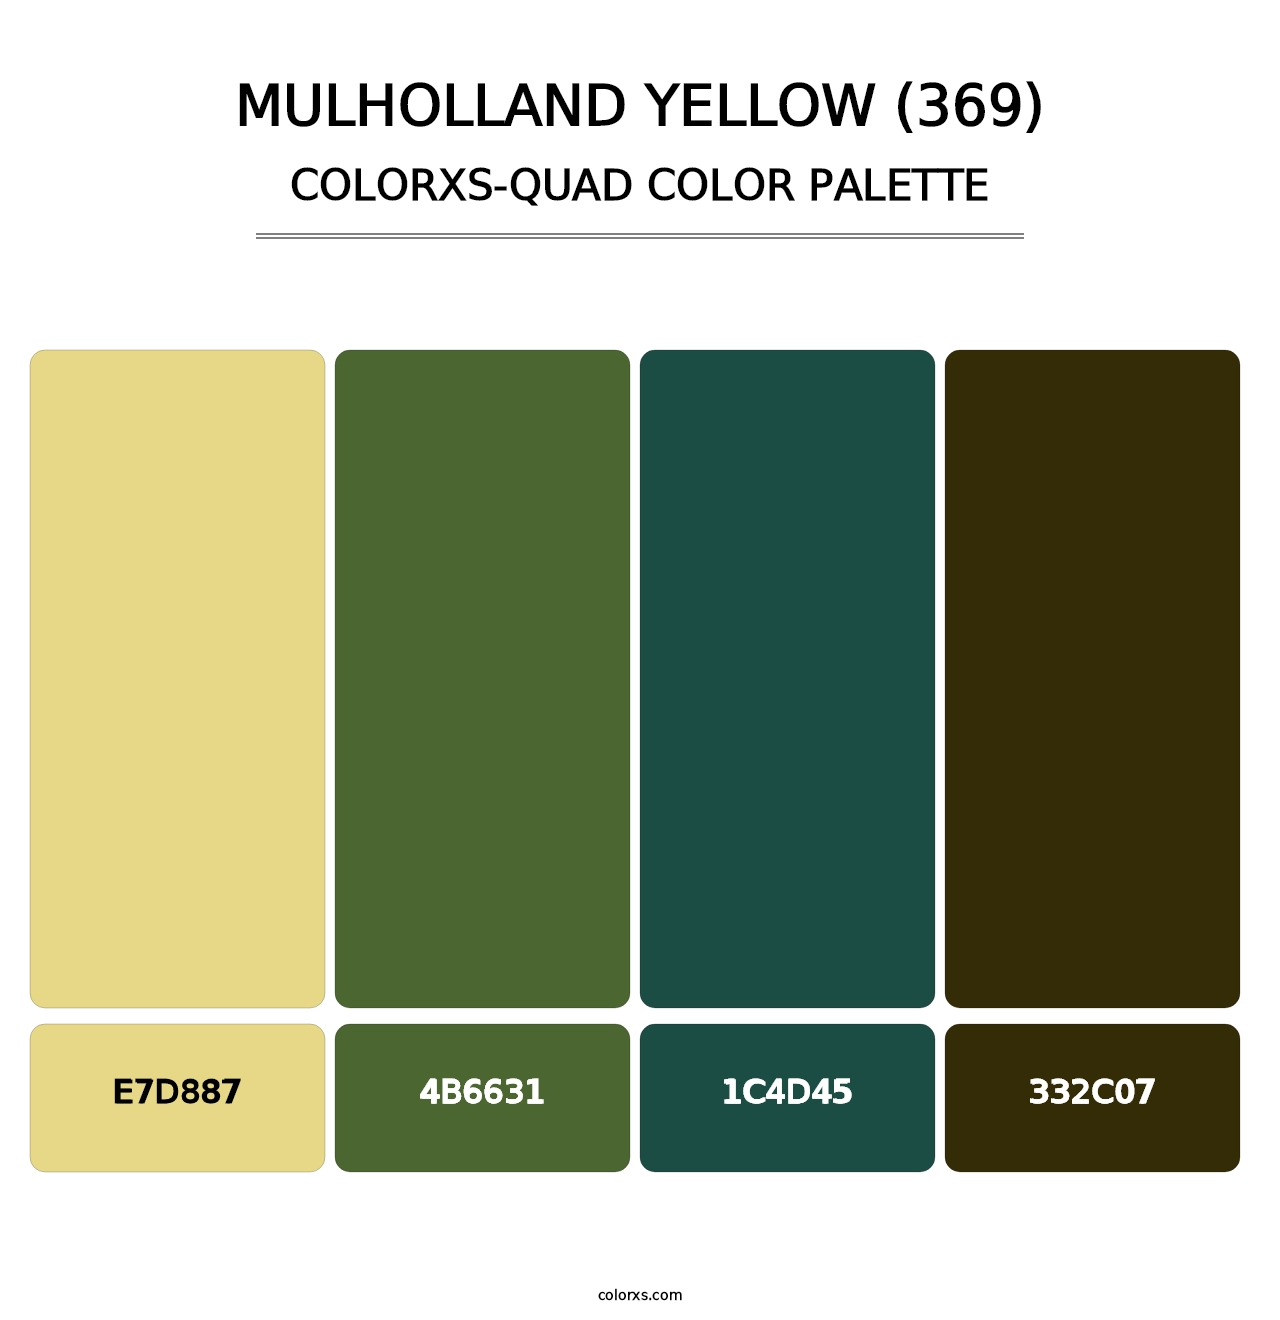 Mulholland Yellow (369) - Colorxs Quad Palette